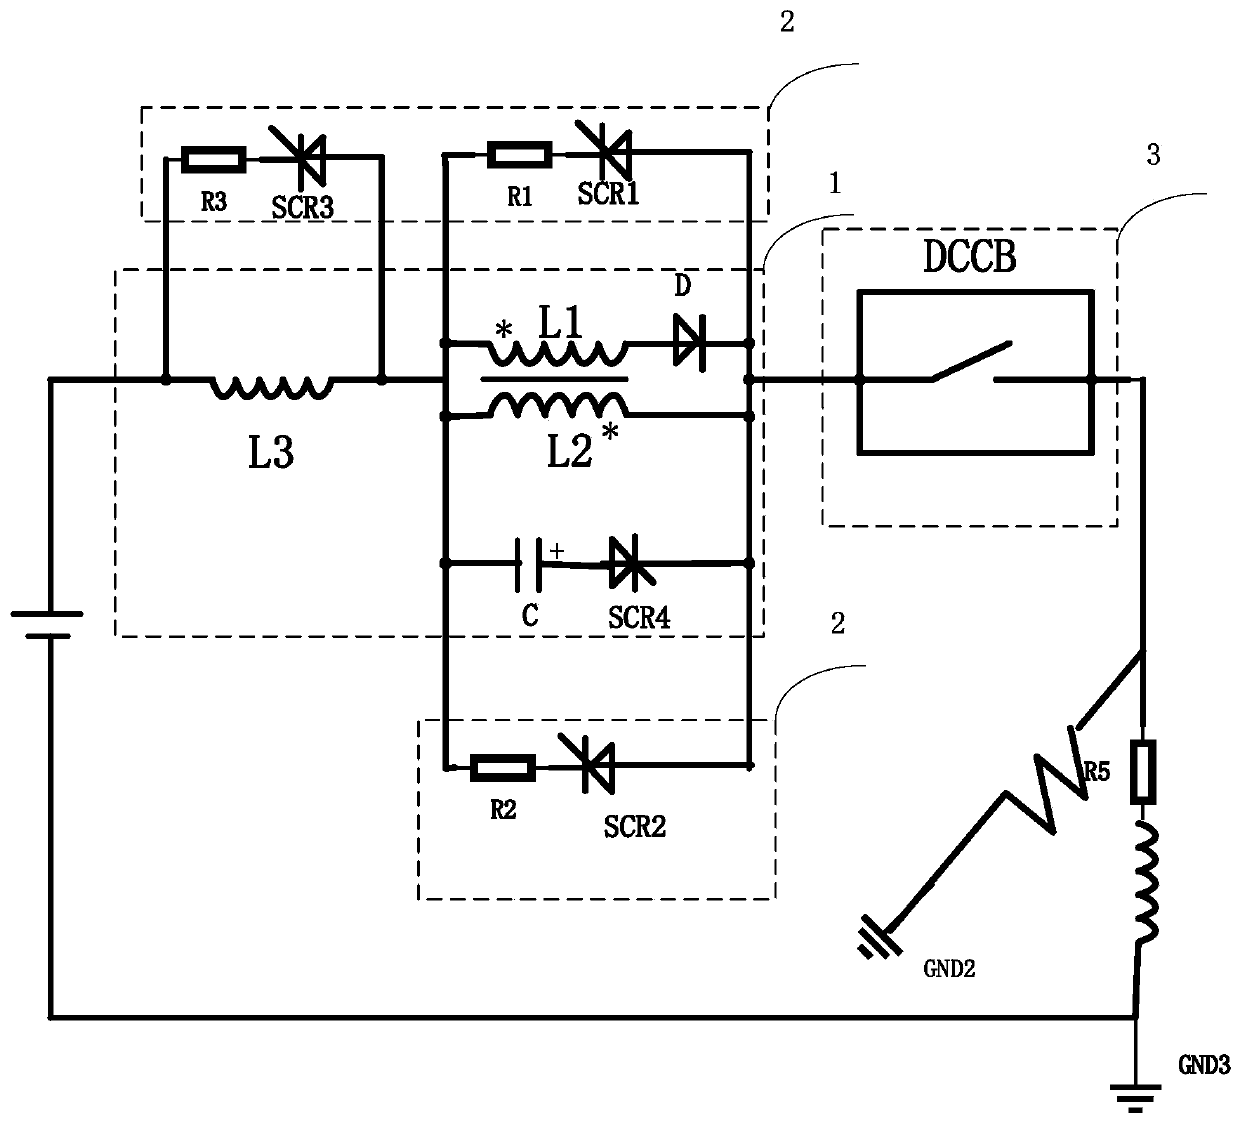 High-voltage DC current limiter based on coupled reactors